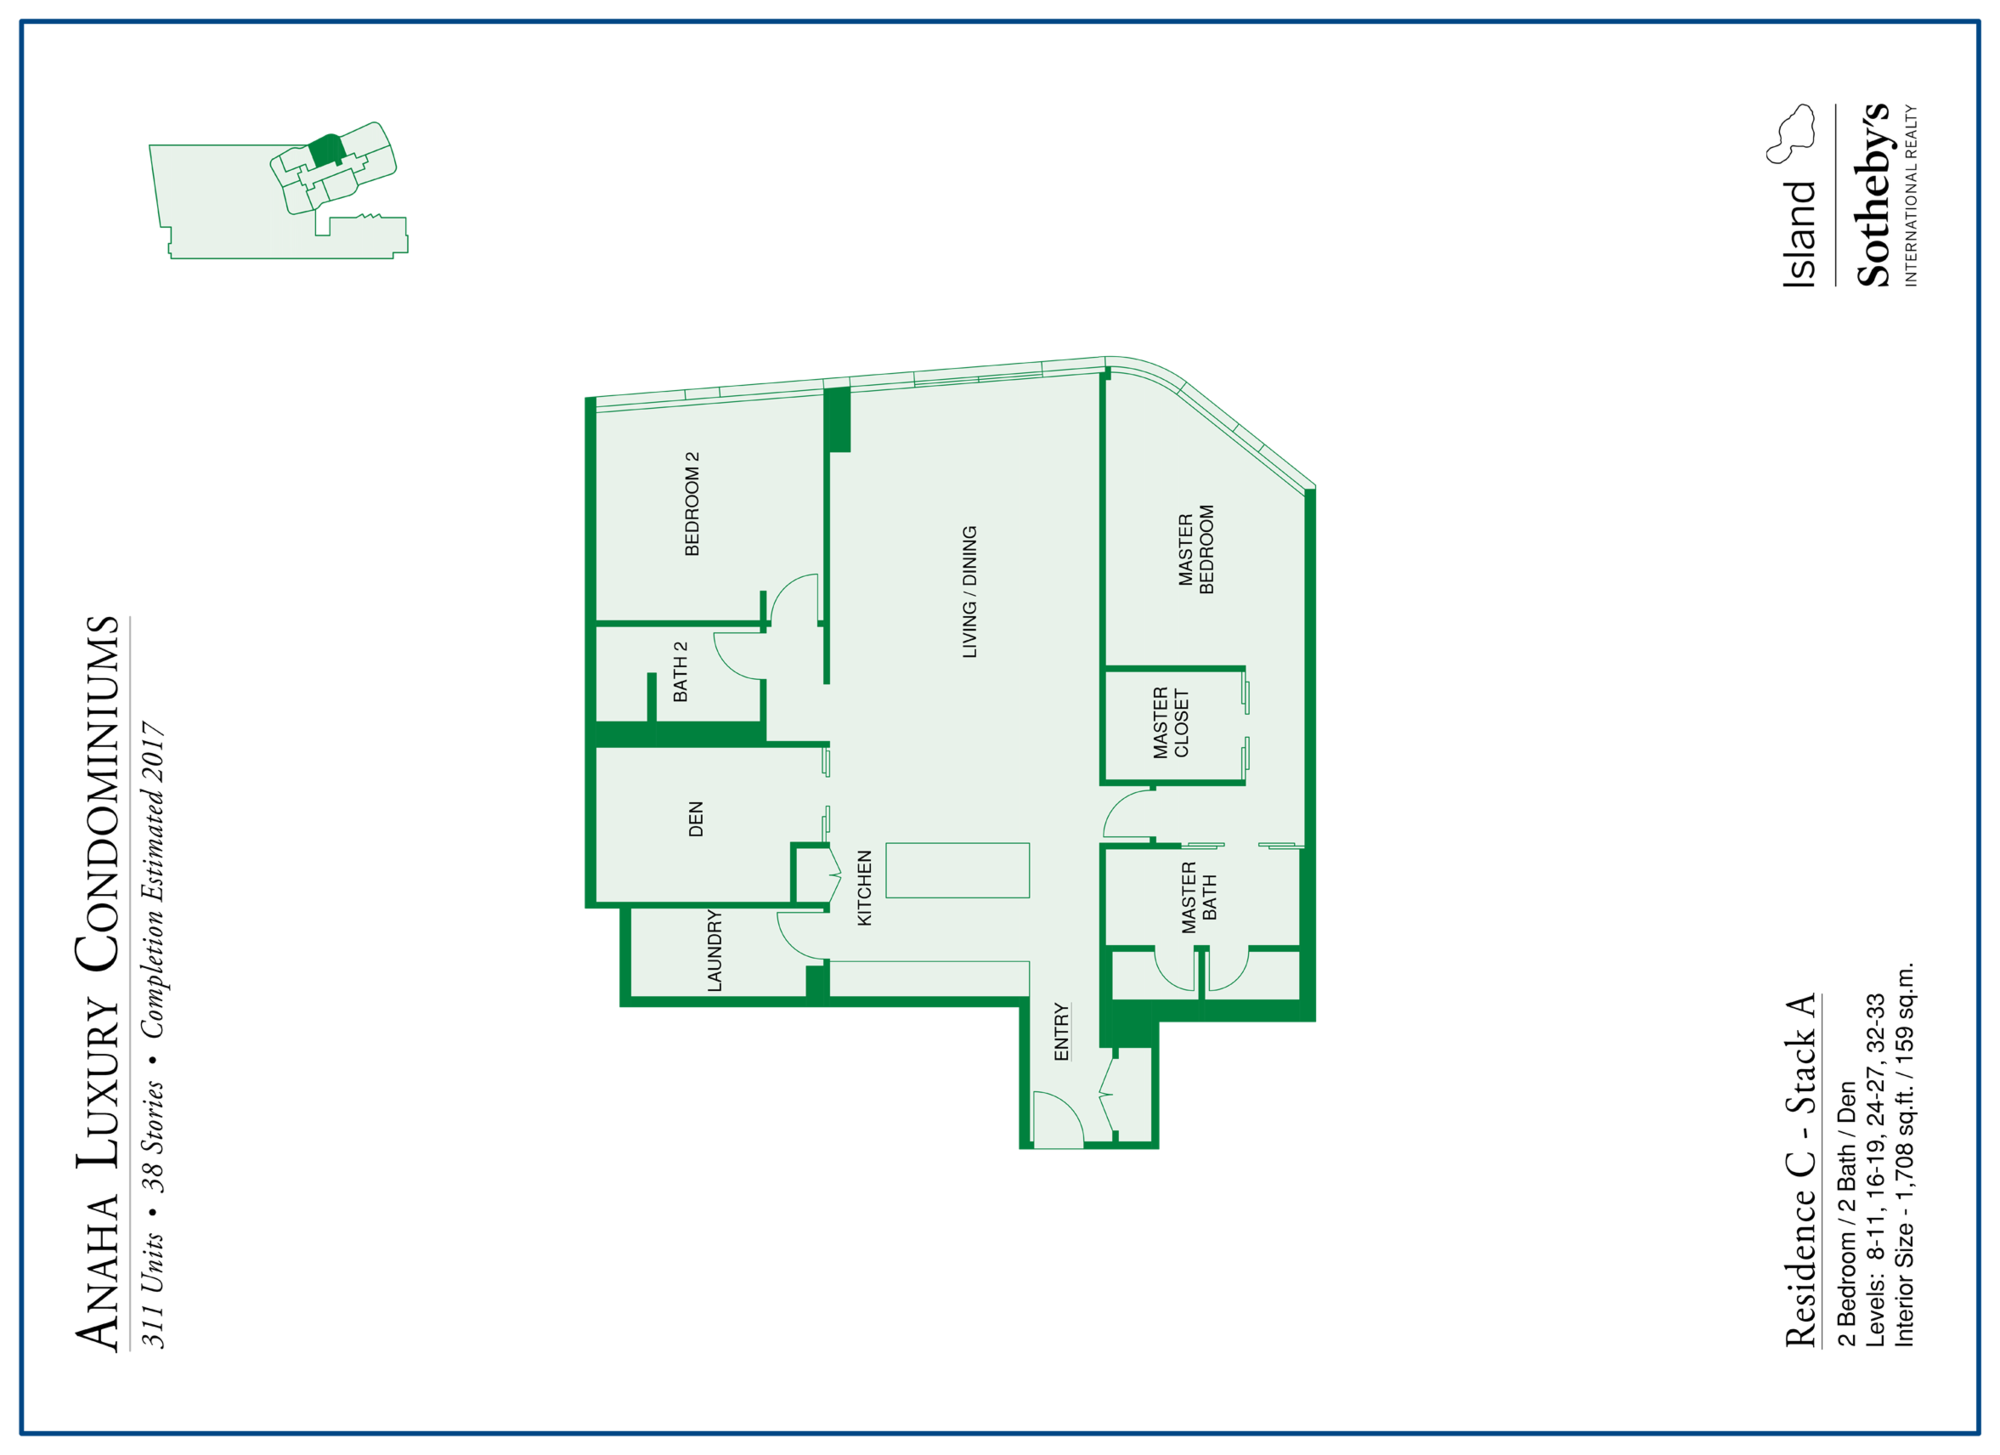 anaha floor plan residence